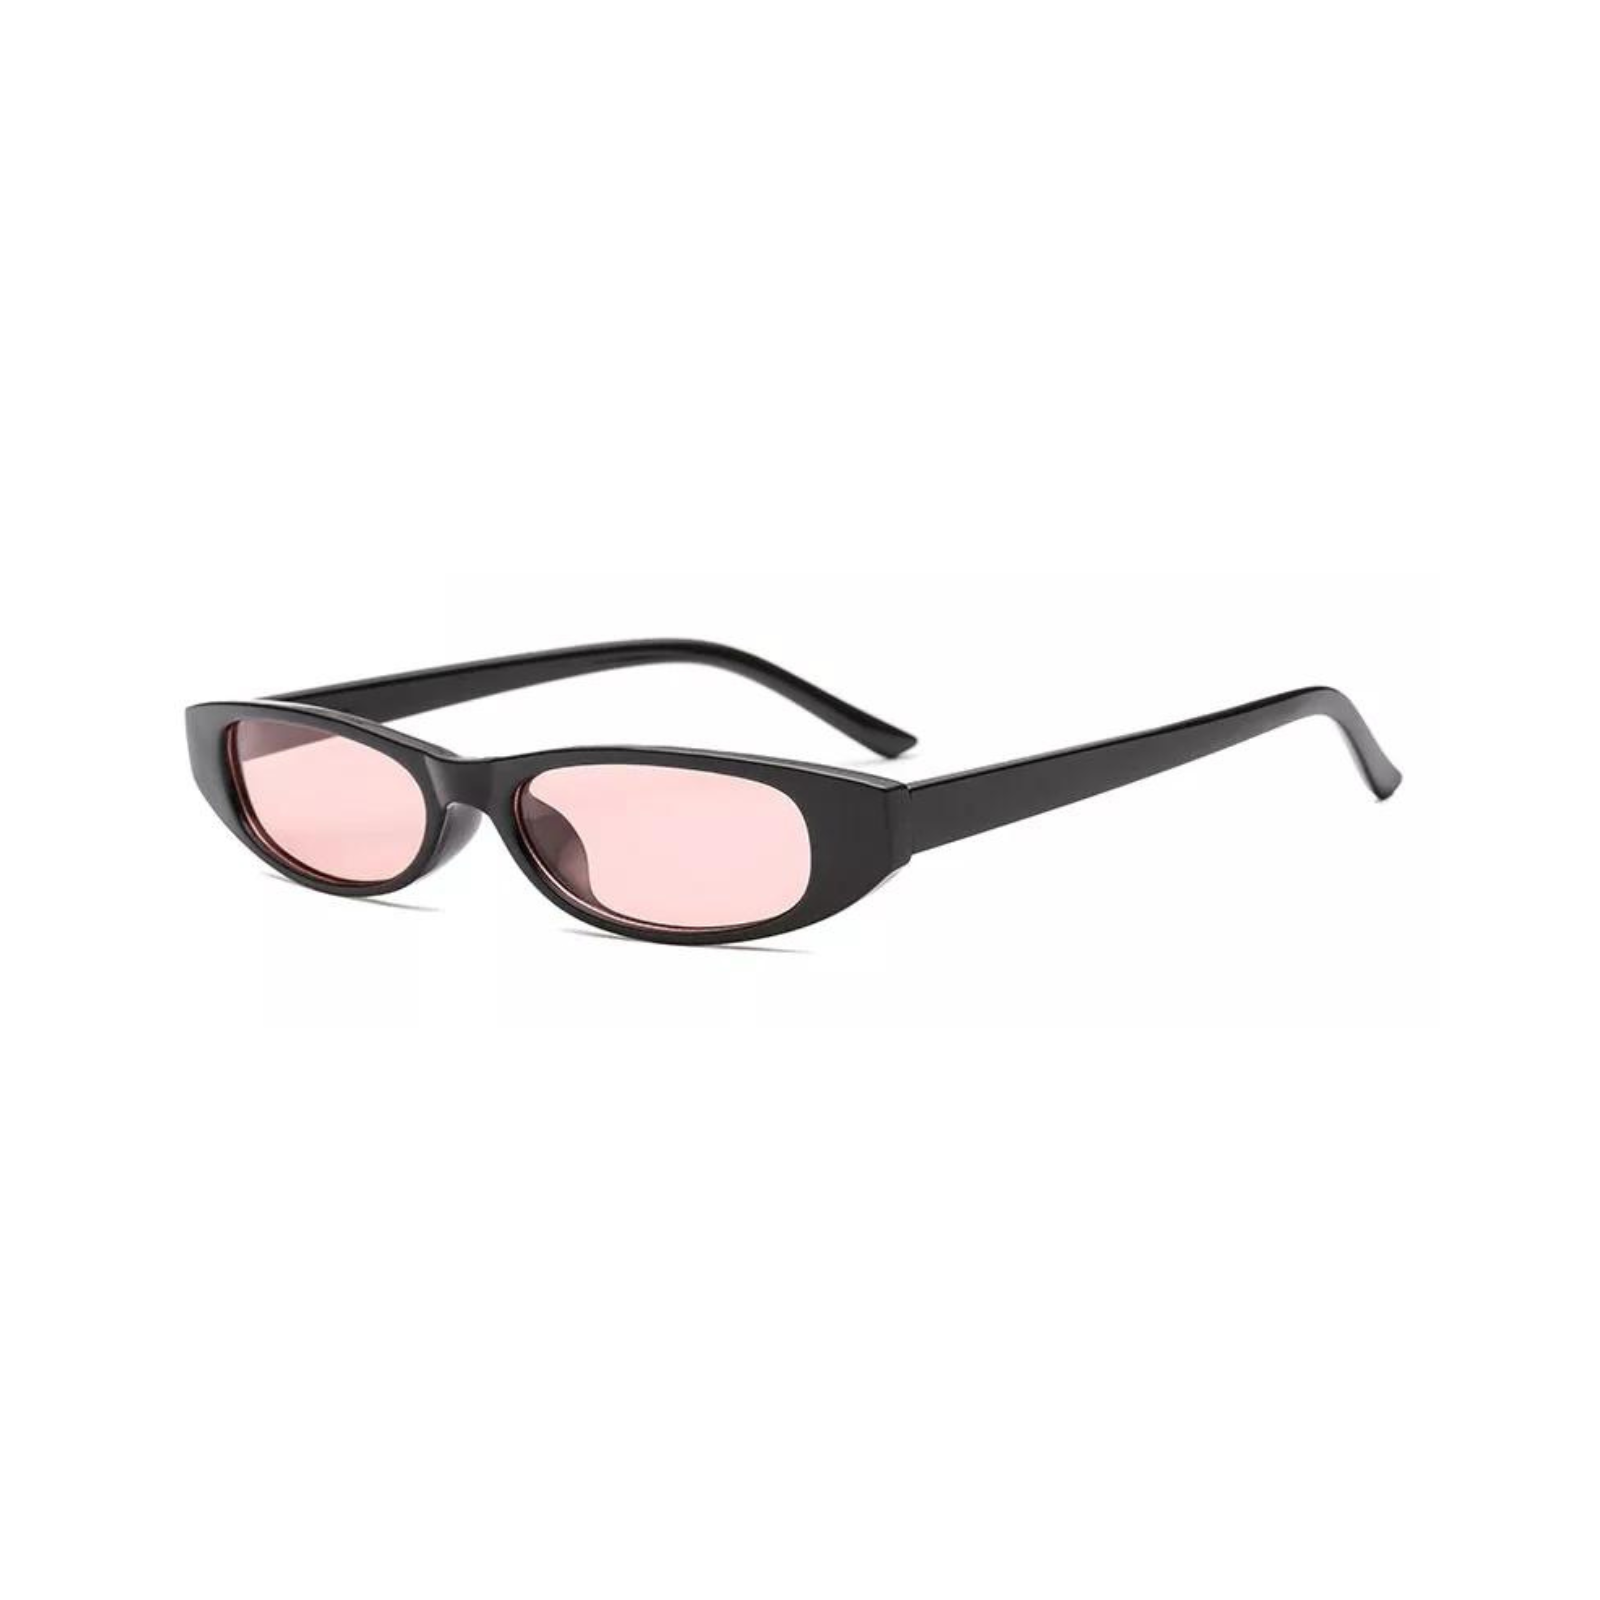 Paige Sunglasses Black + Pink